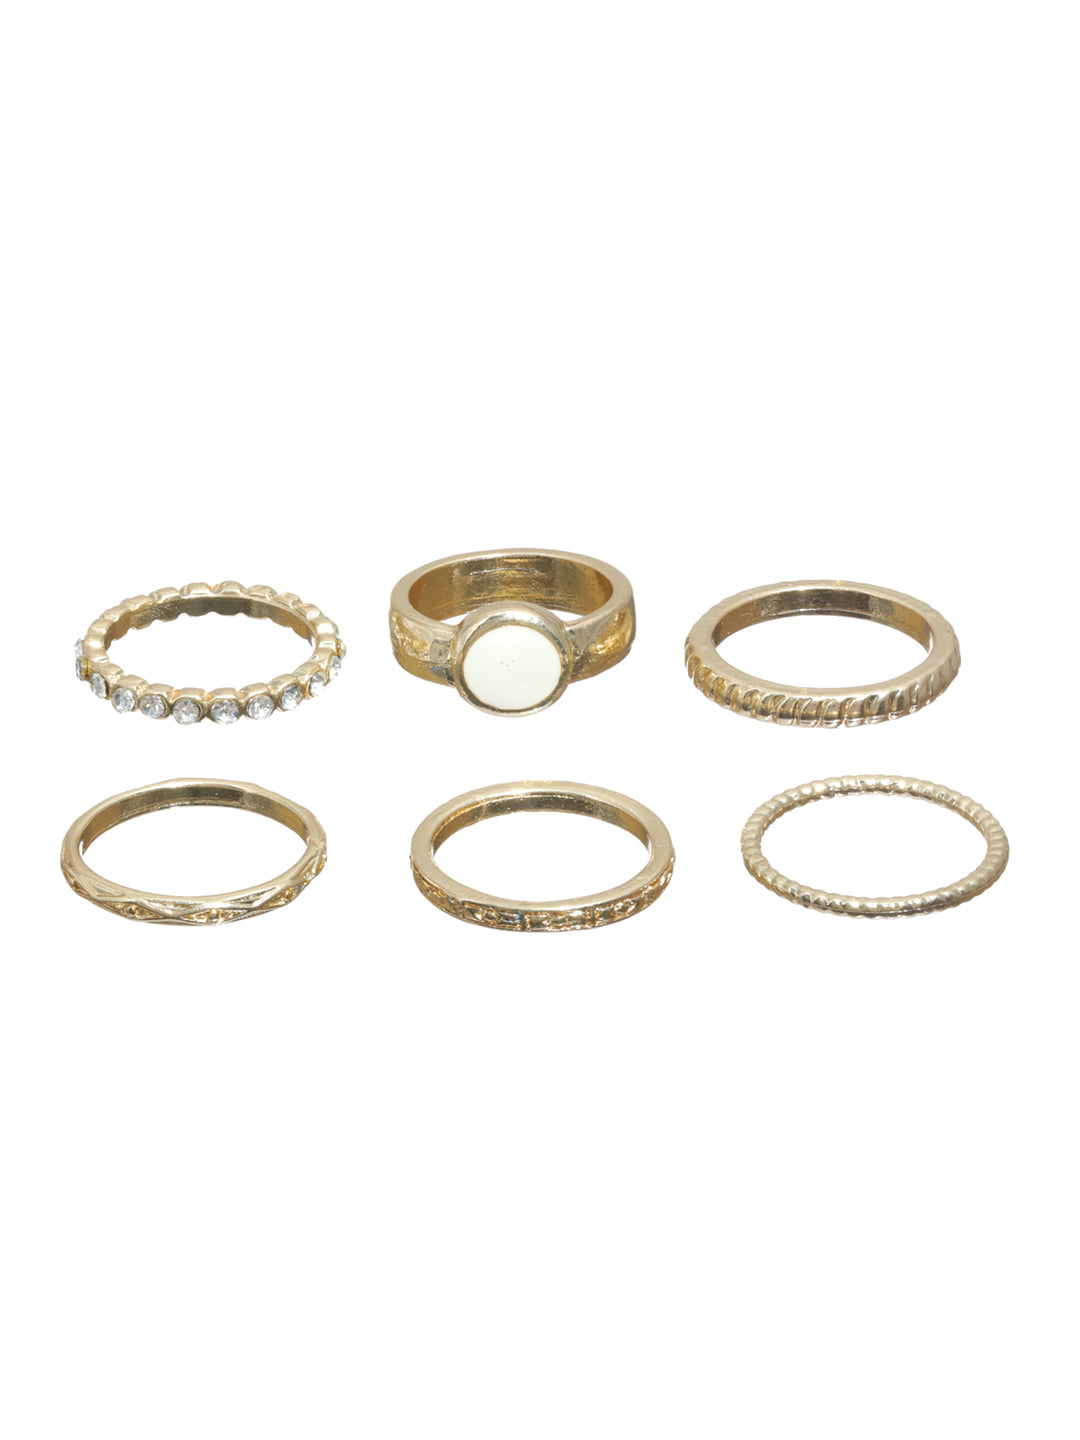 Prita Stylish Gold Plated Ring Set of 6